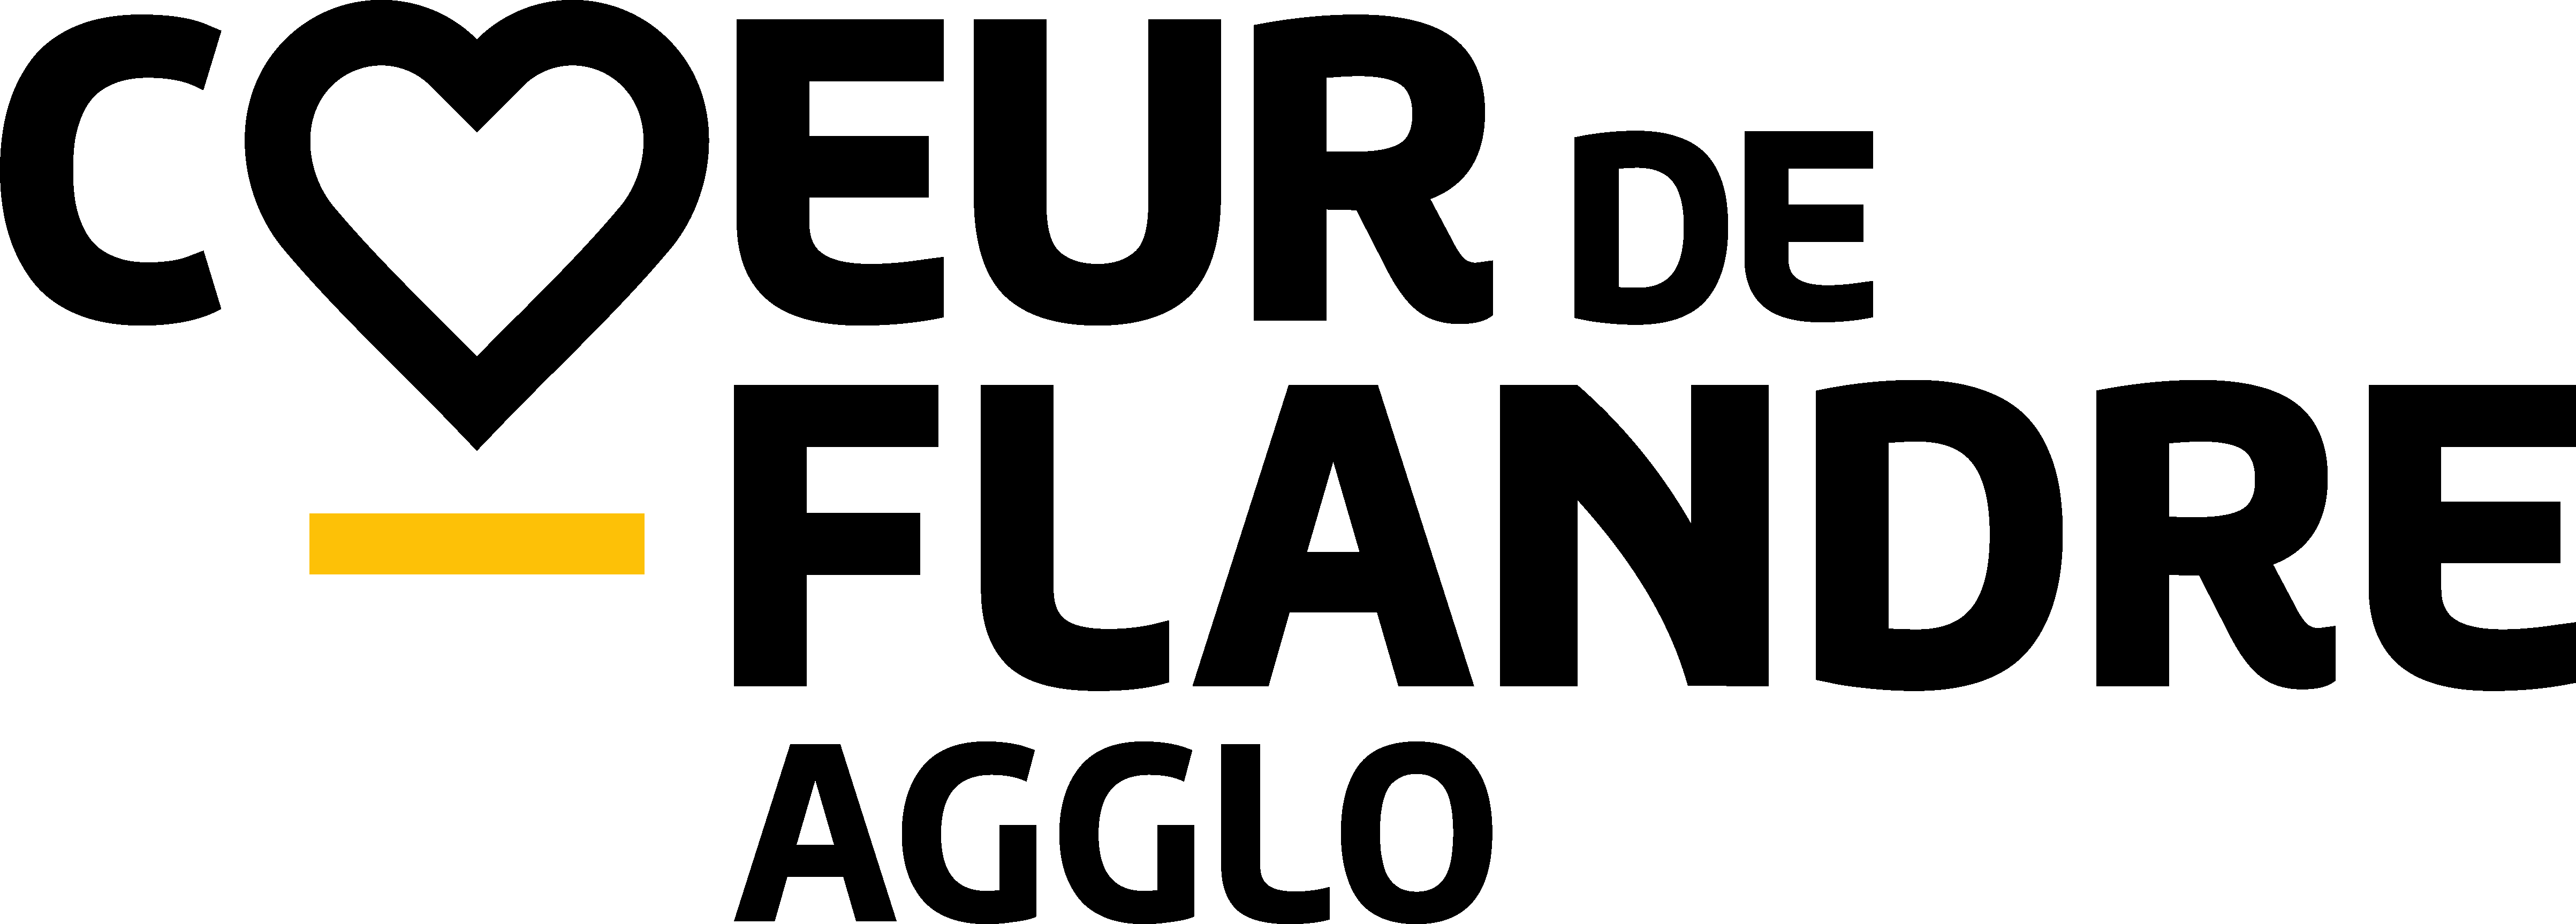 logo-CDFA-RVB.png